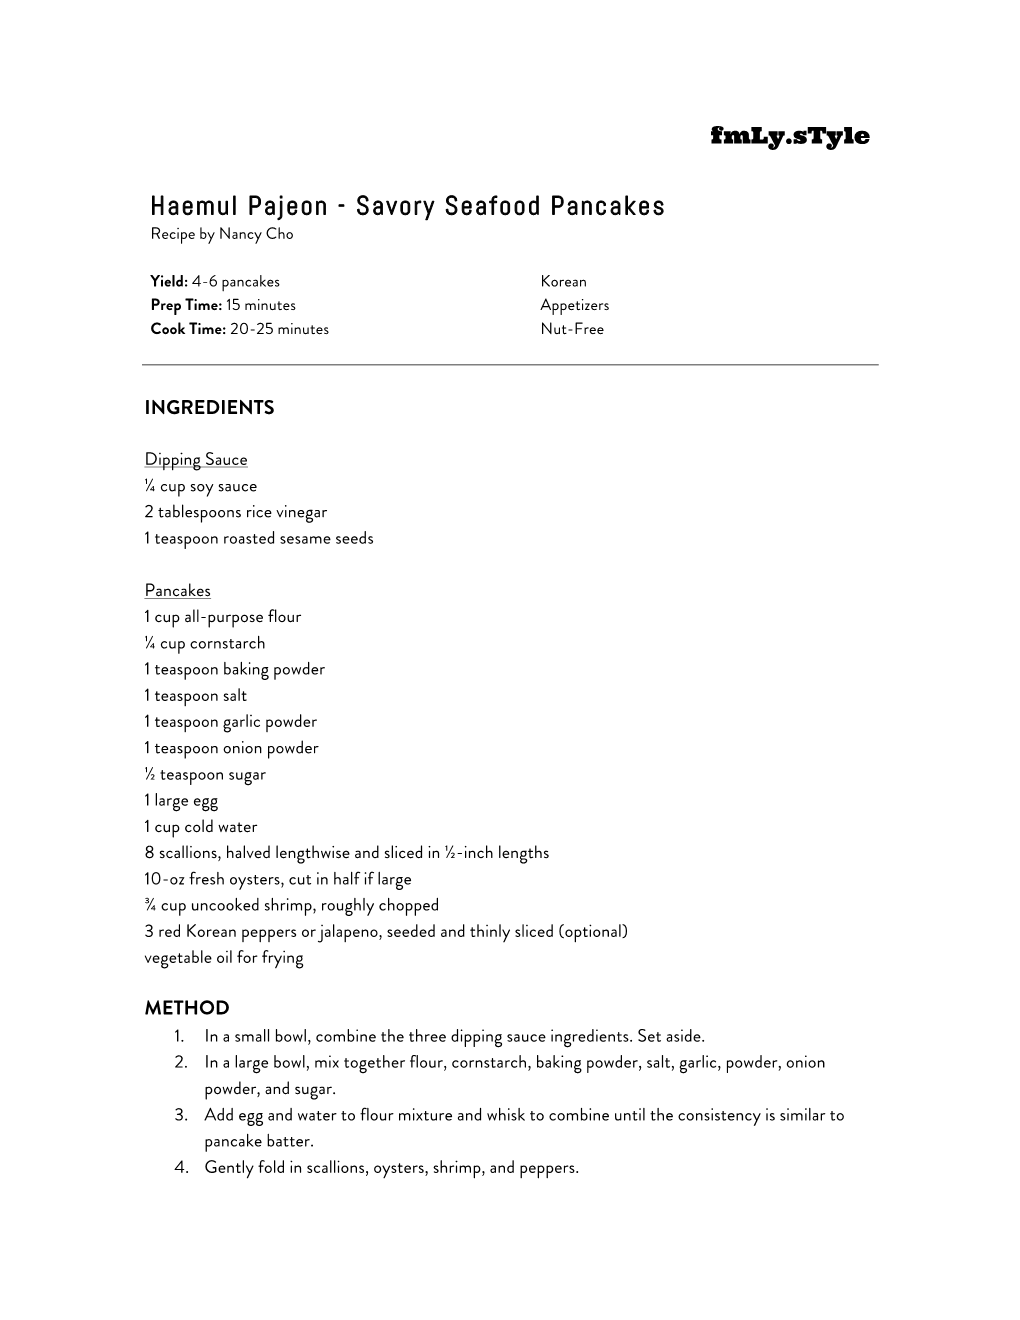 Haemul Pajeon - Savory Seafood Pancakes Recipe by Nancy Cho